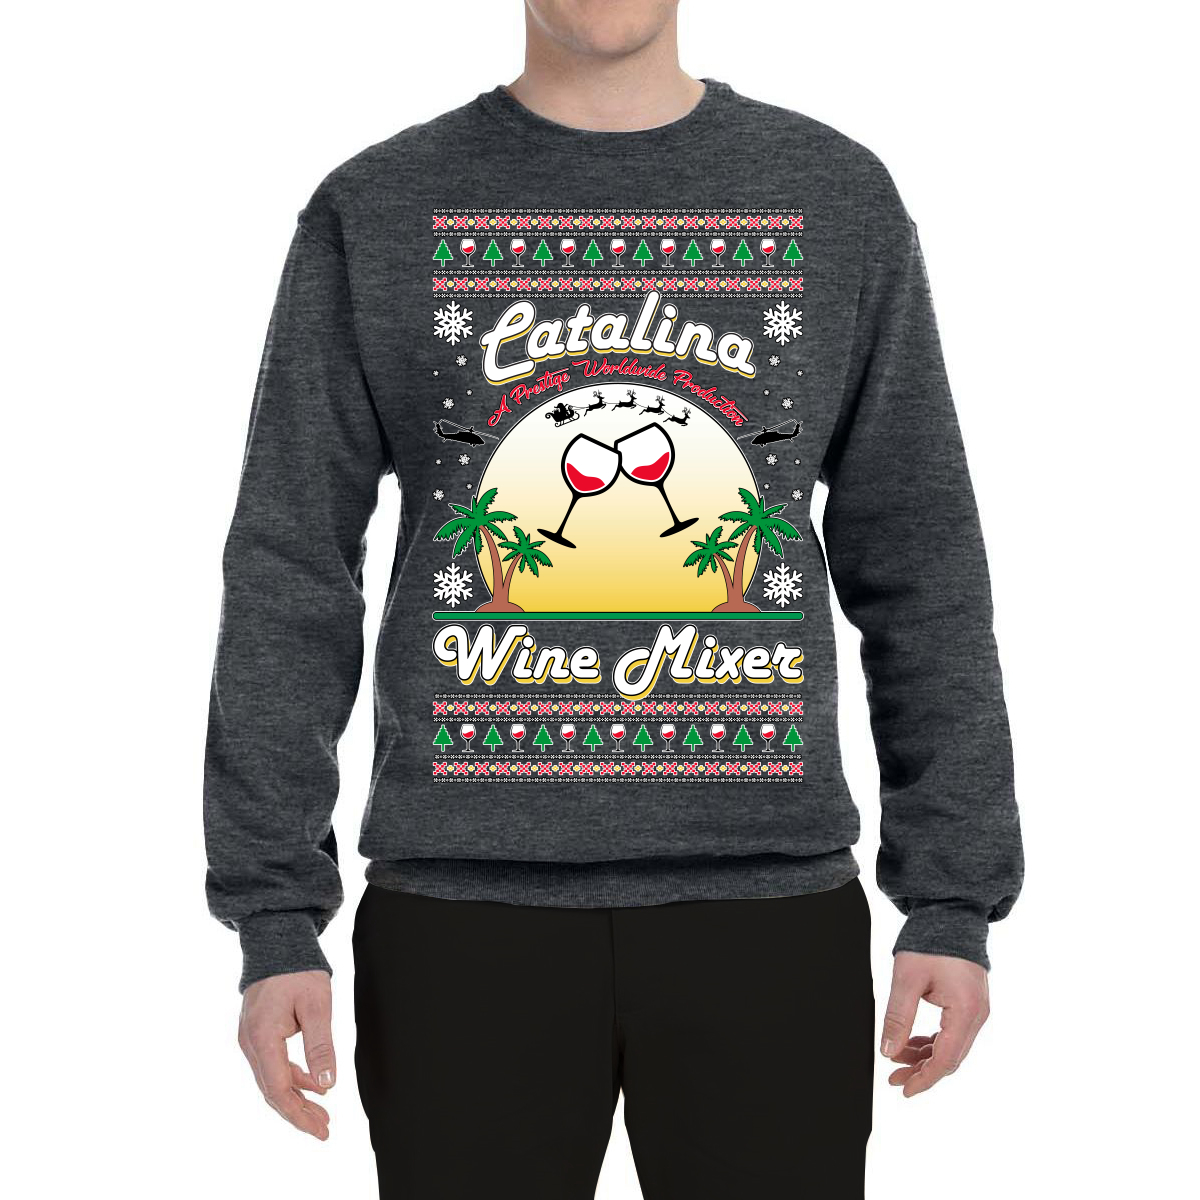 Wild Bobby, Step Bros Catalina Wine Mixer Xmas Holiday Movie Humor Ugly Christmas Sweater Unisex Crewneck Graphic Sweatshirt, Charcoal, XX-Large - image 2 of 5